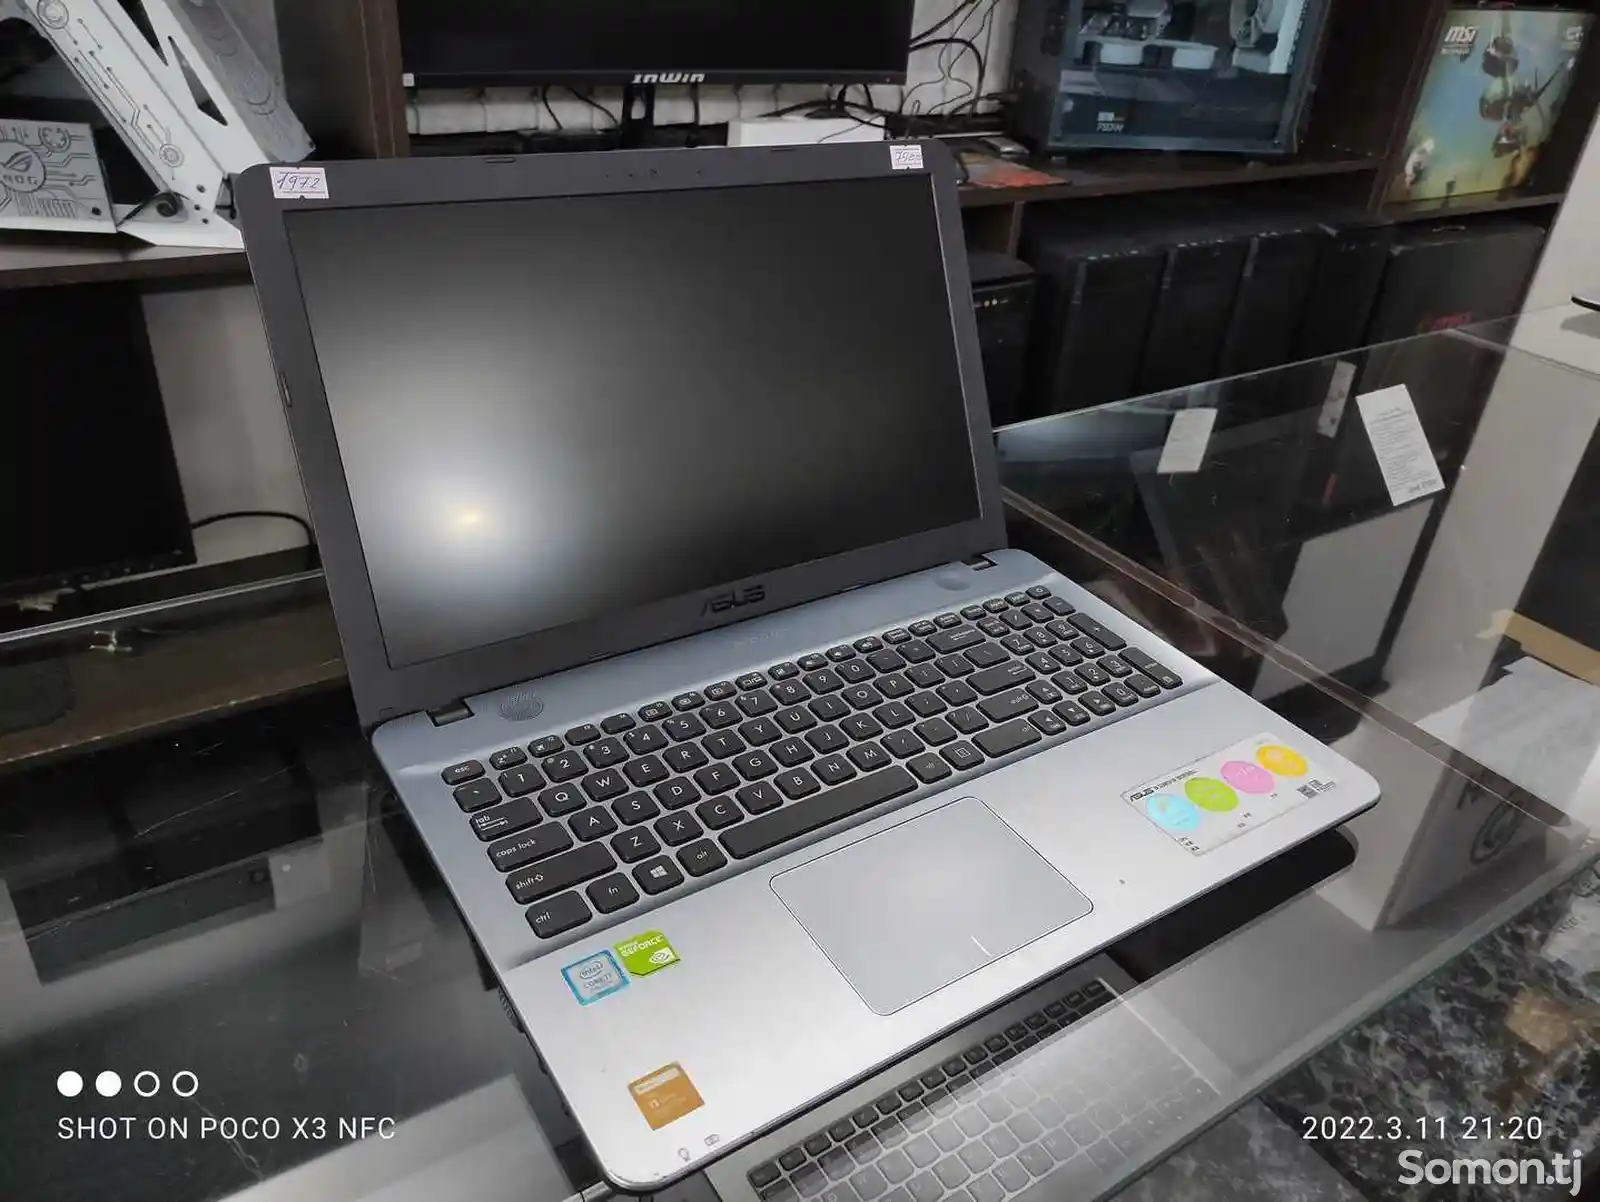 Игровой ноутбук Asus X541UJ Core i7-7500U 2.9GHz 8gb/256gb SSD 7TH GEN-2